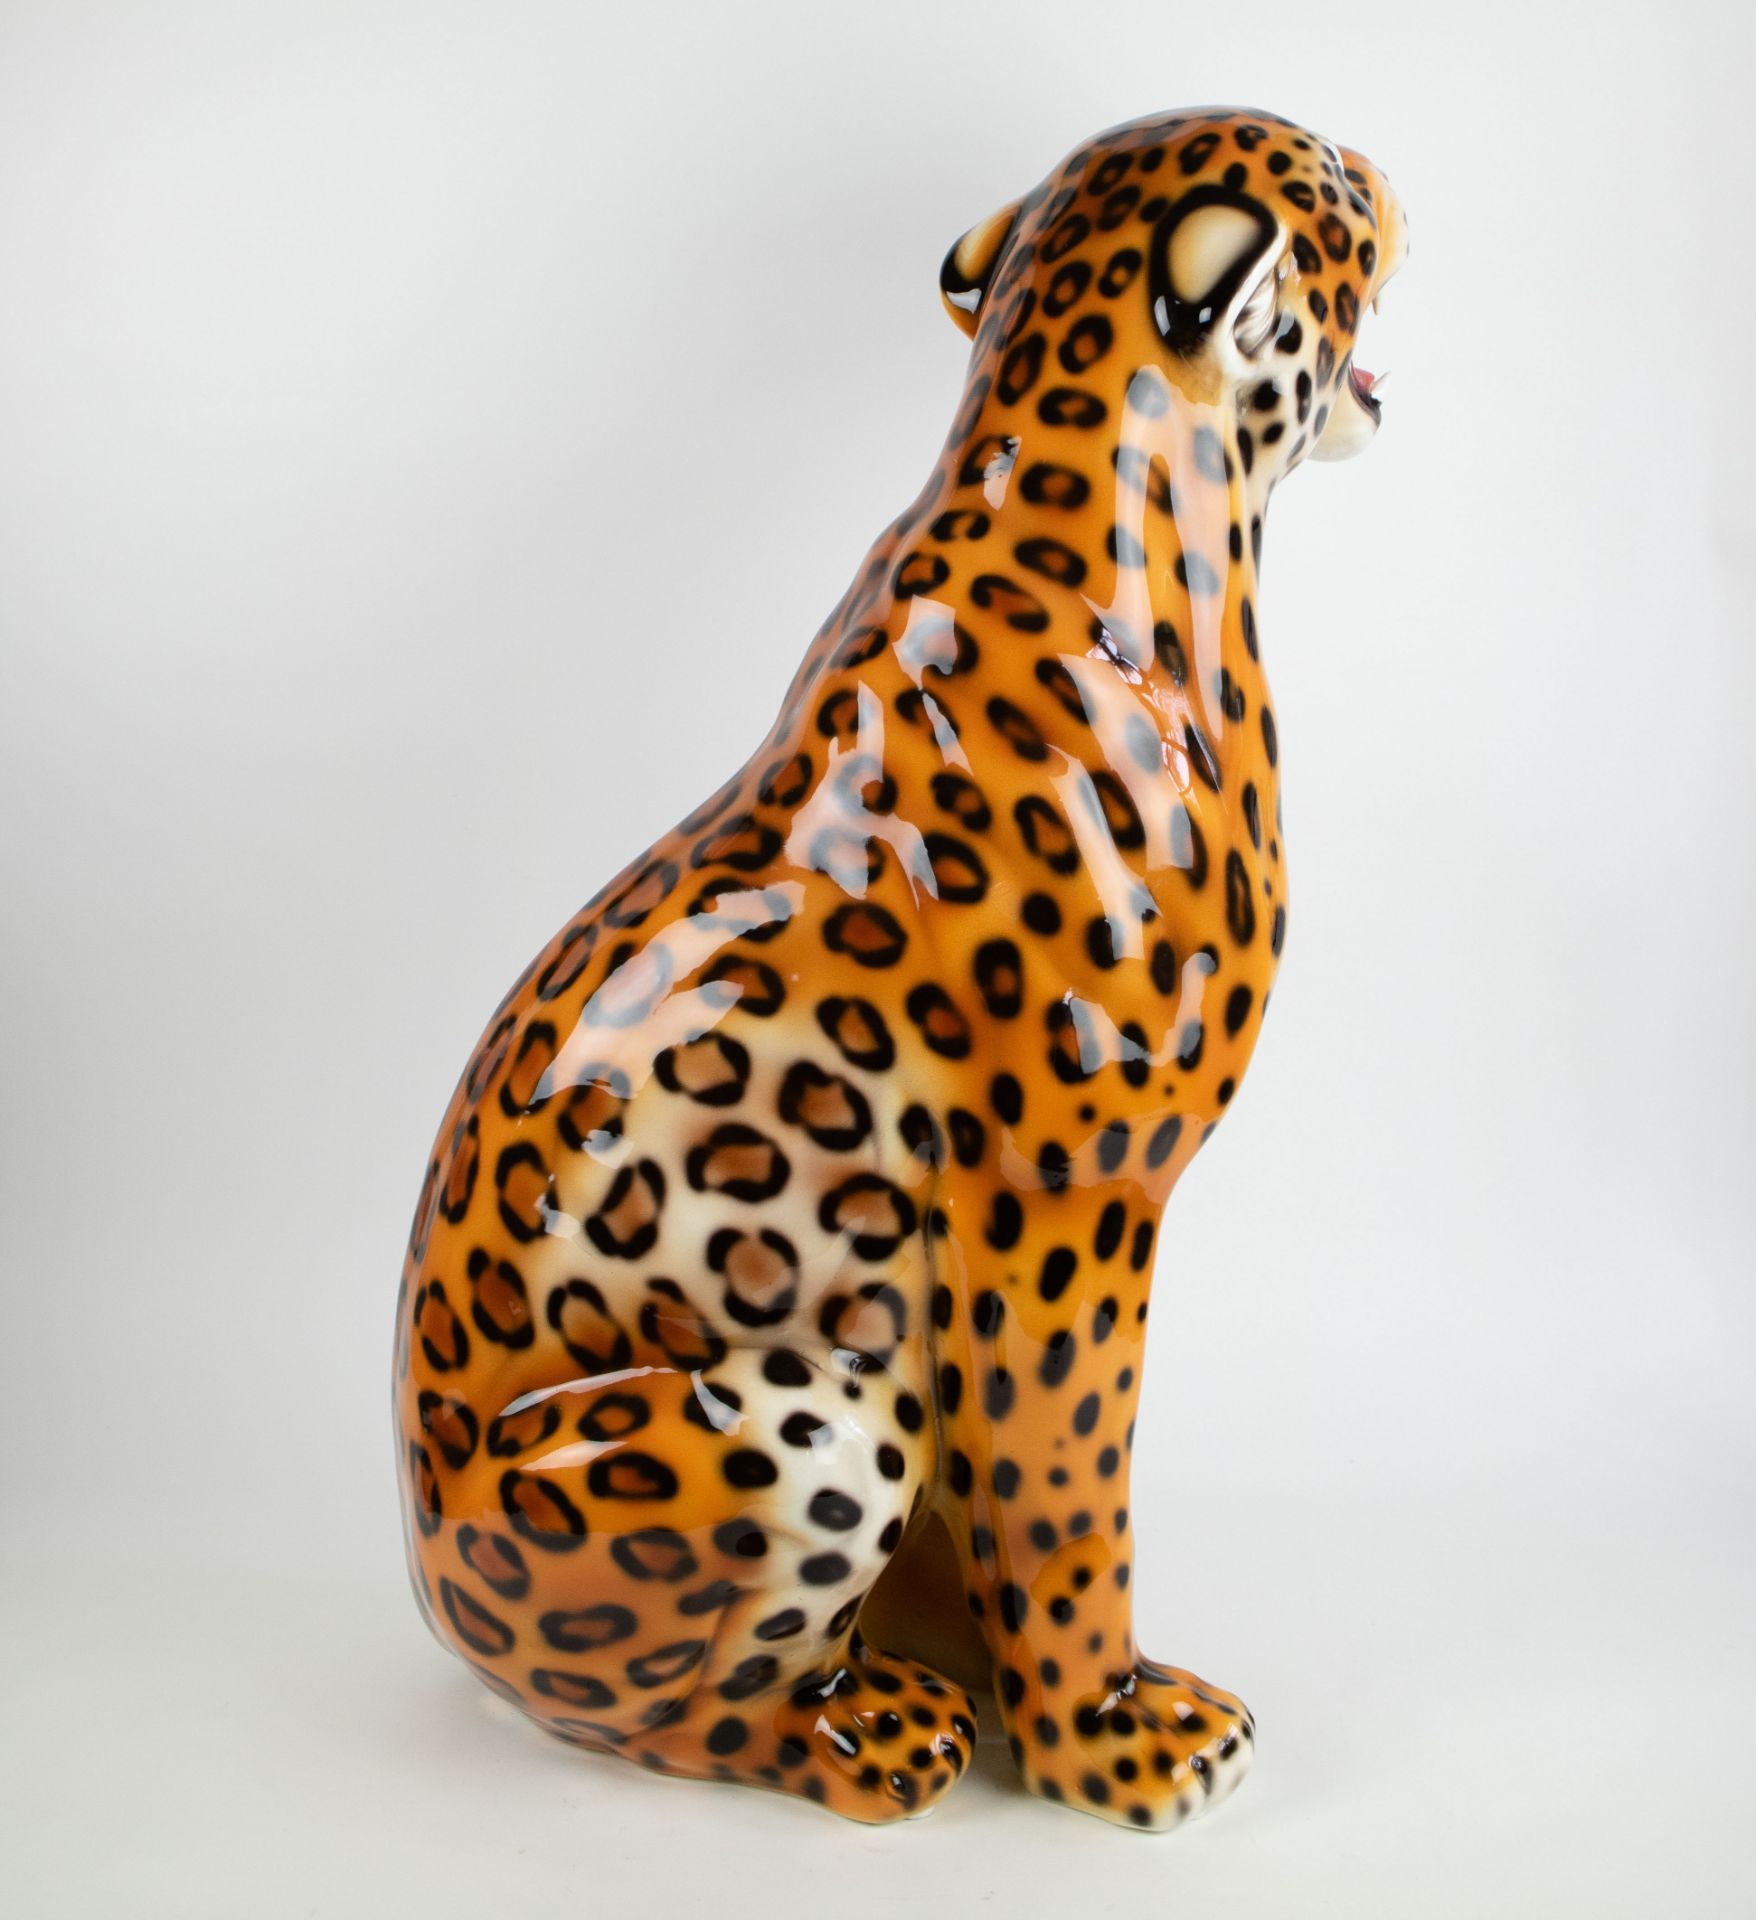 Italian Ceramic sculpture of a leopard - Image 4 of 5